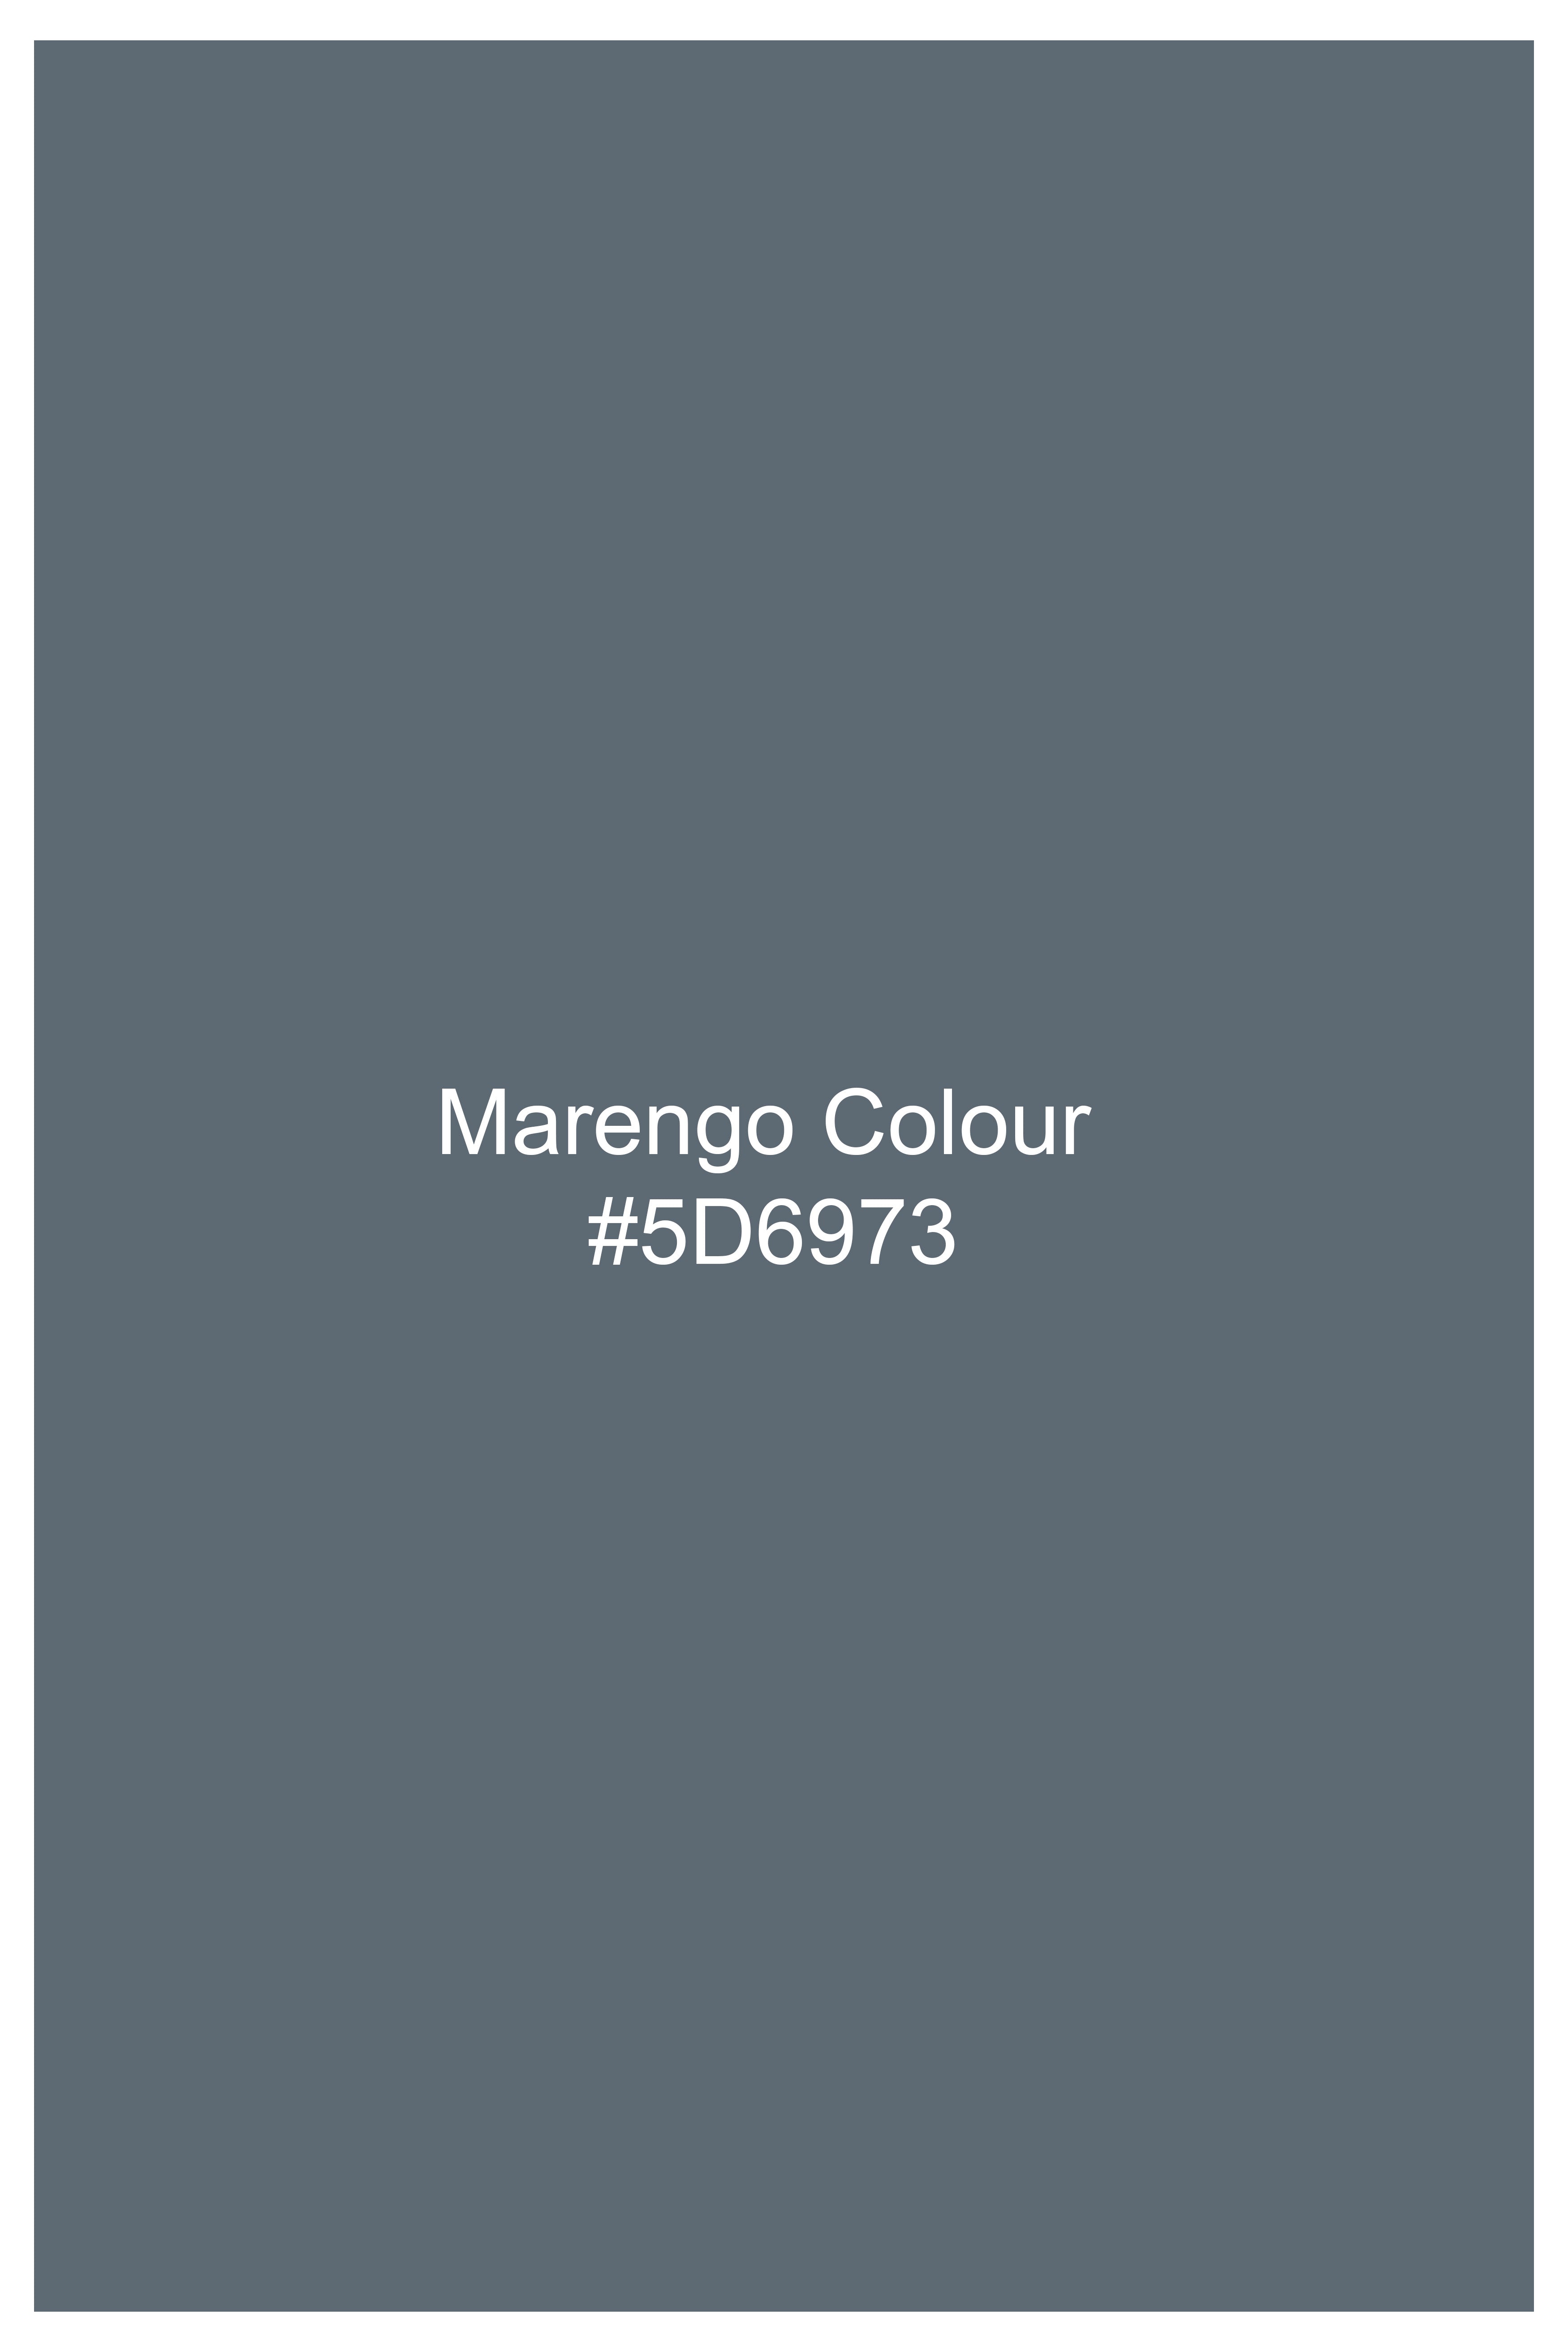 Marengo Gray Premium Cotton Waistcoat V2975-36, V2975-38, V2975-40, V2975-42, V2975-44, V2975-46, V2975-48, V2975-50, V2975-75, V2975-54, V2975-56, V2975-58, V2975-60